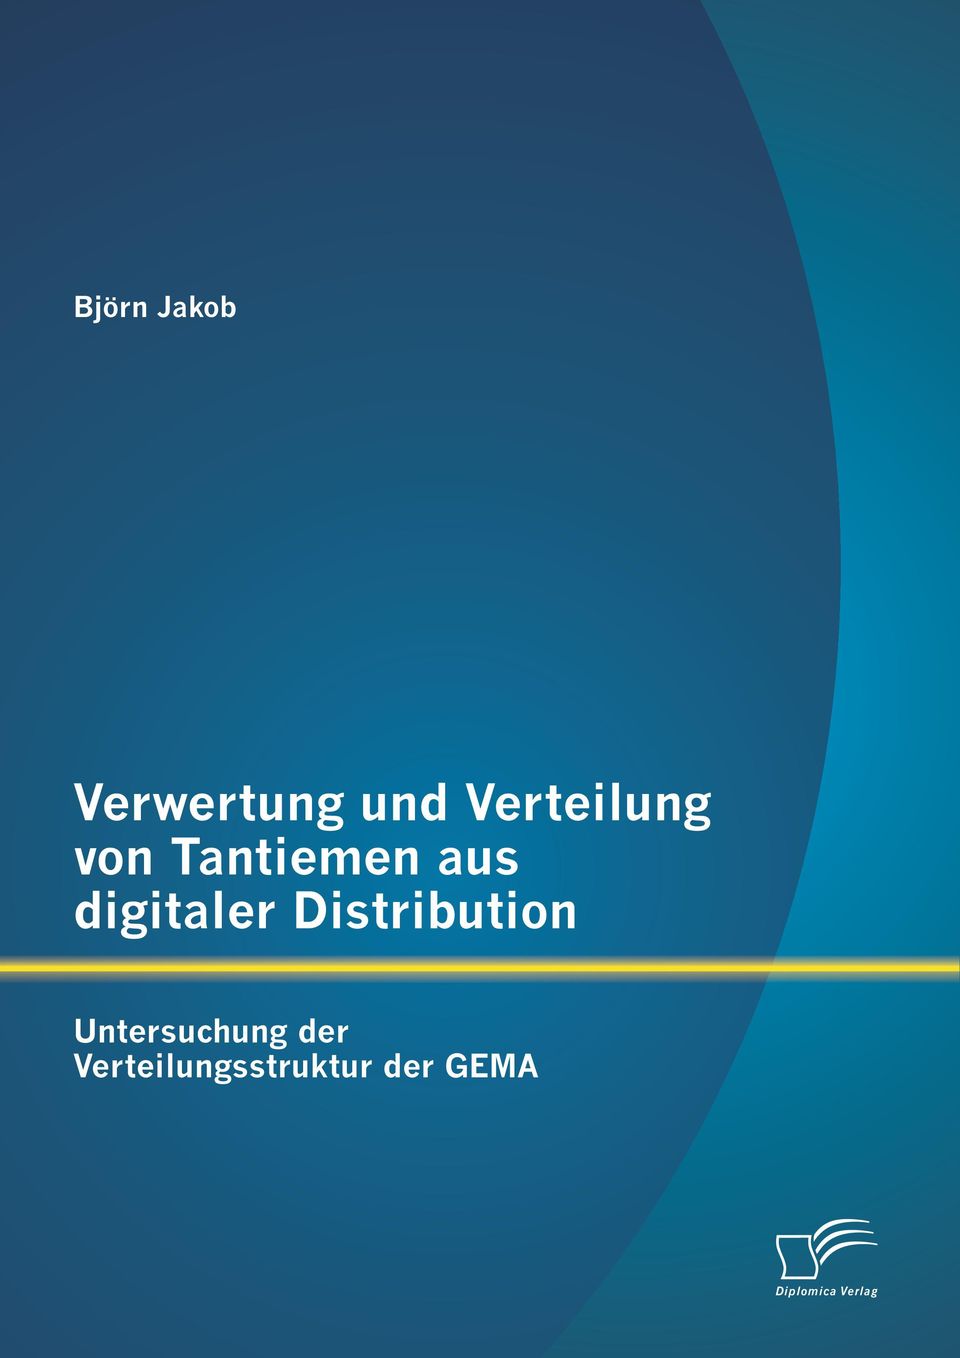 digitaler Distribution Untersuchung